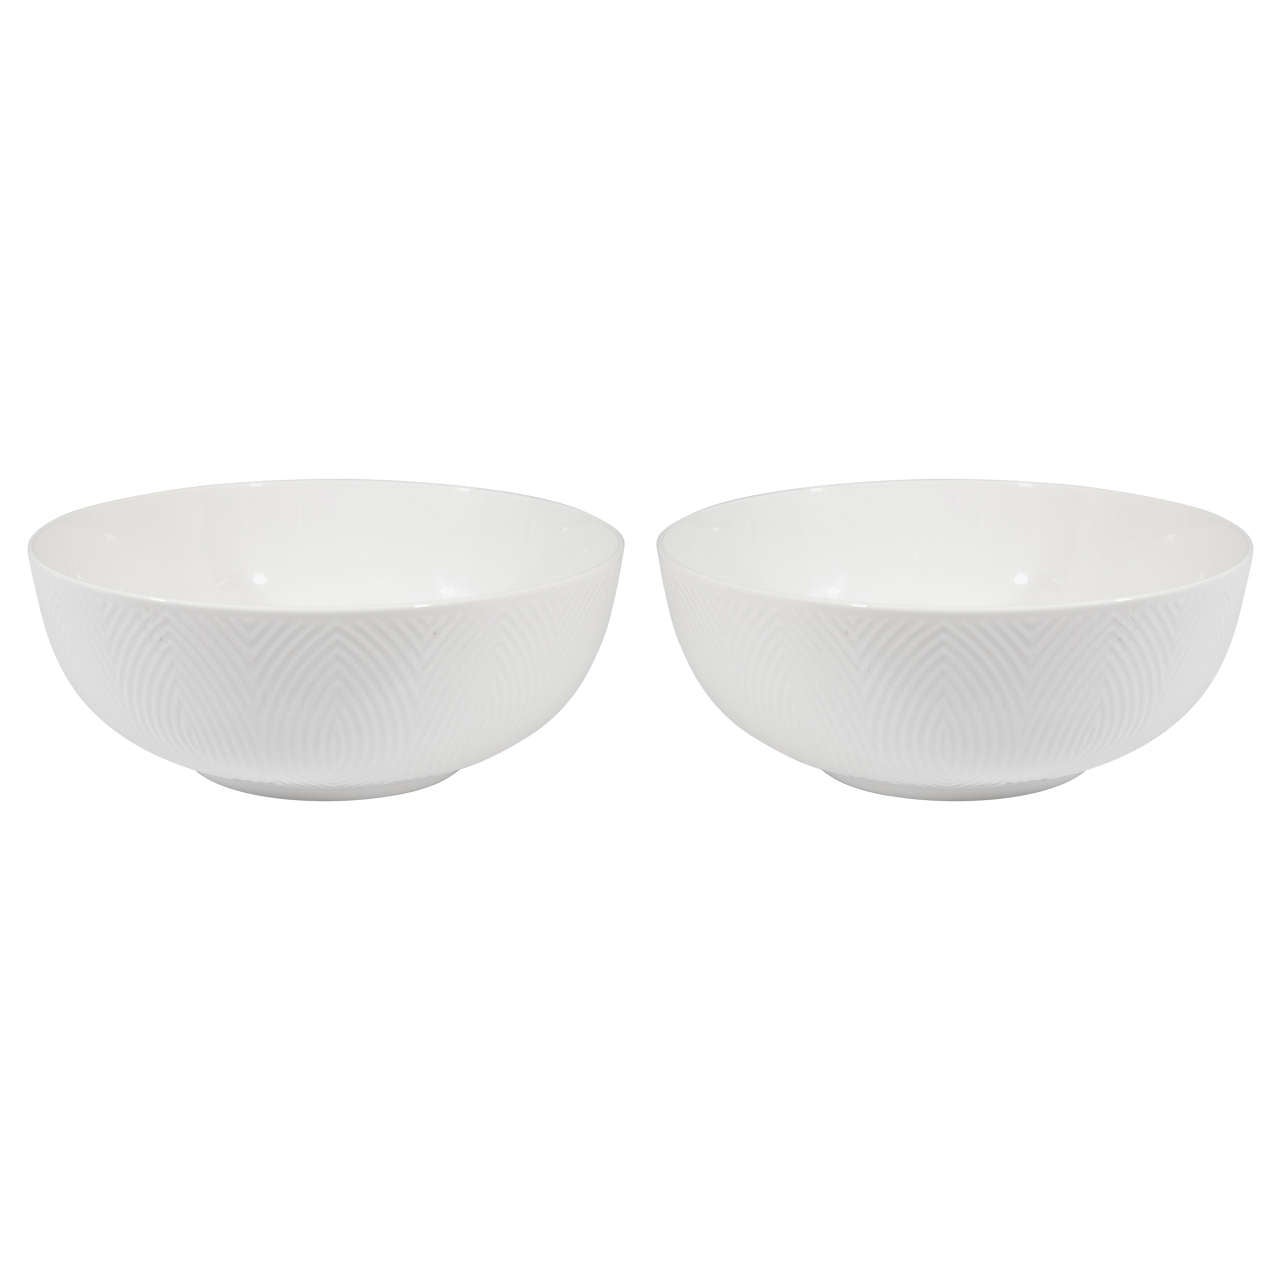 Scandinavian Modern Pair of White Royal Copenhagen Bowls by Axel Salto